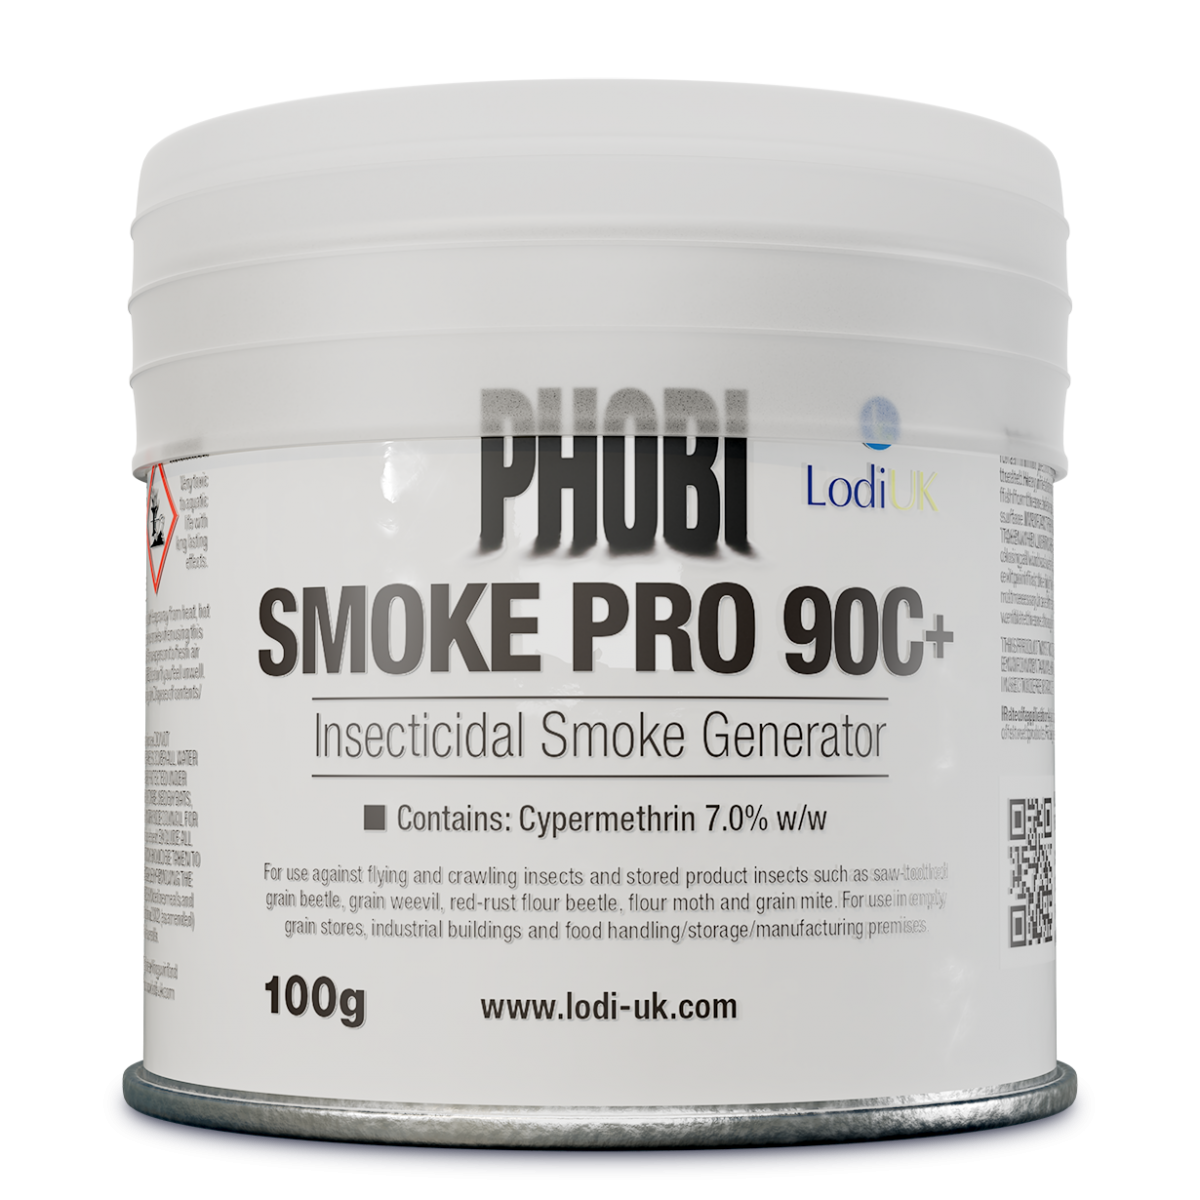 Phobi Smoke Pro 90C+